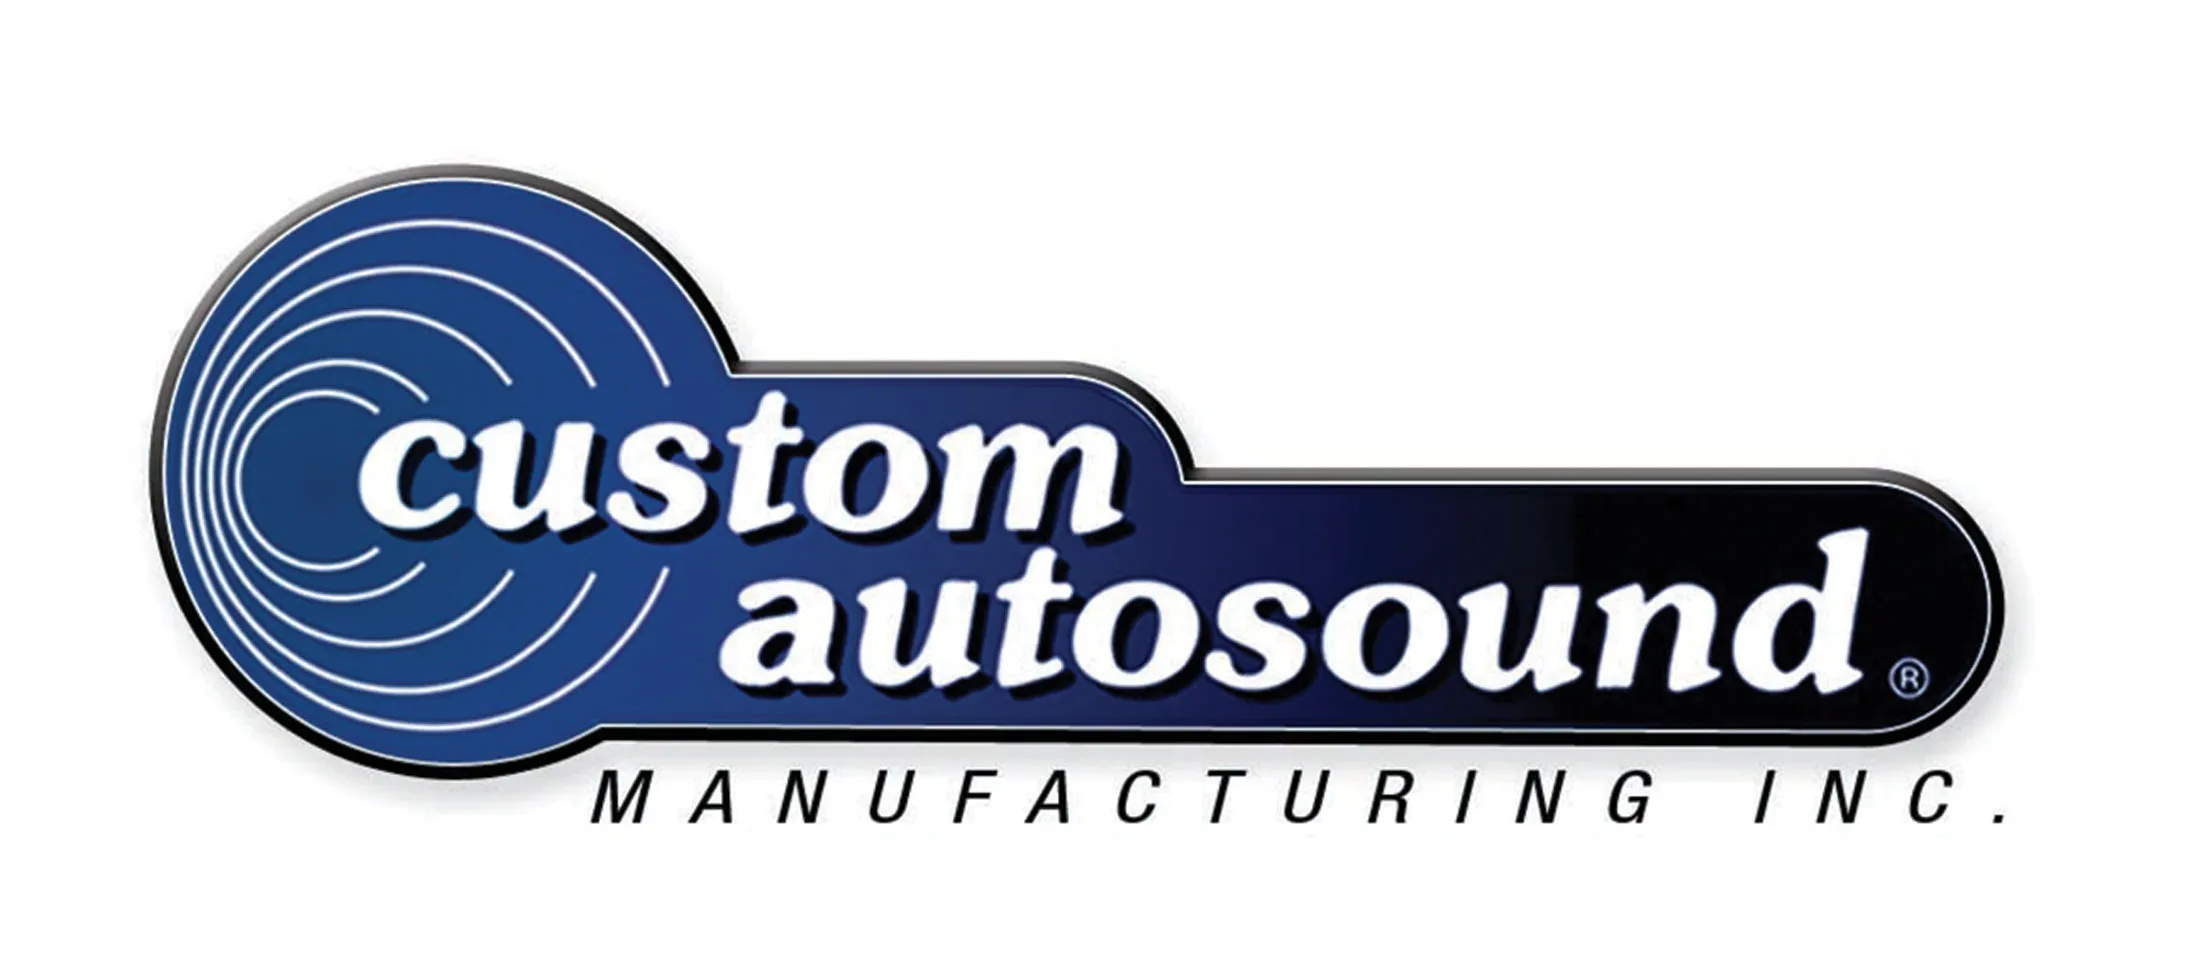 Custom Autosound Mfg Inc. logo